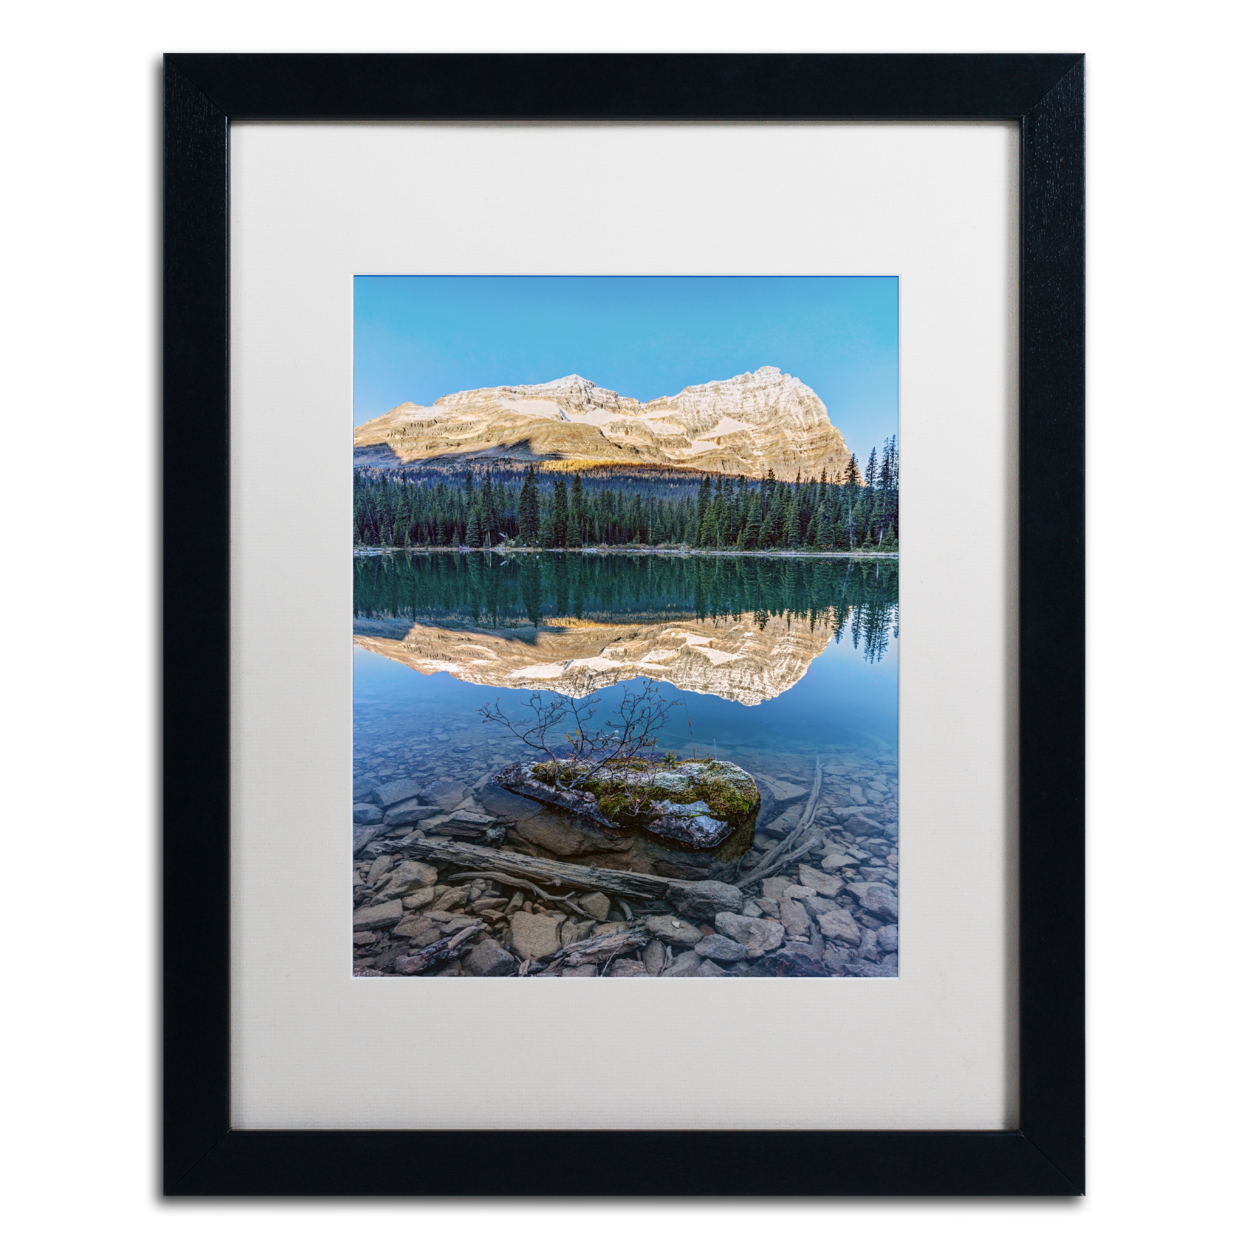 Pierre Leclerc 'Calm O'Hara Lake Sunrise' Black Wooden Framed Art 18 X 22 Inches